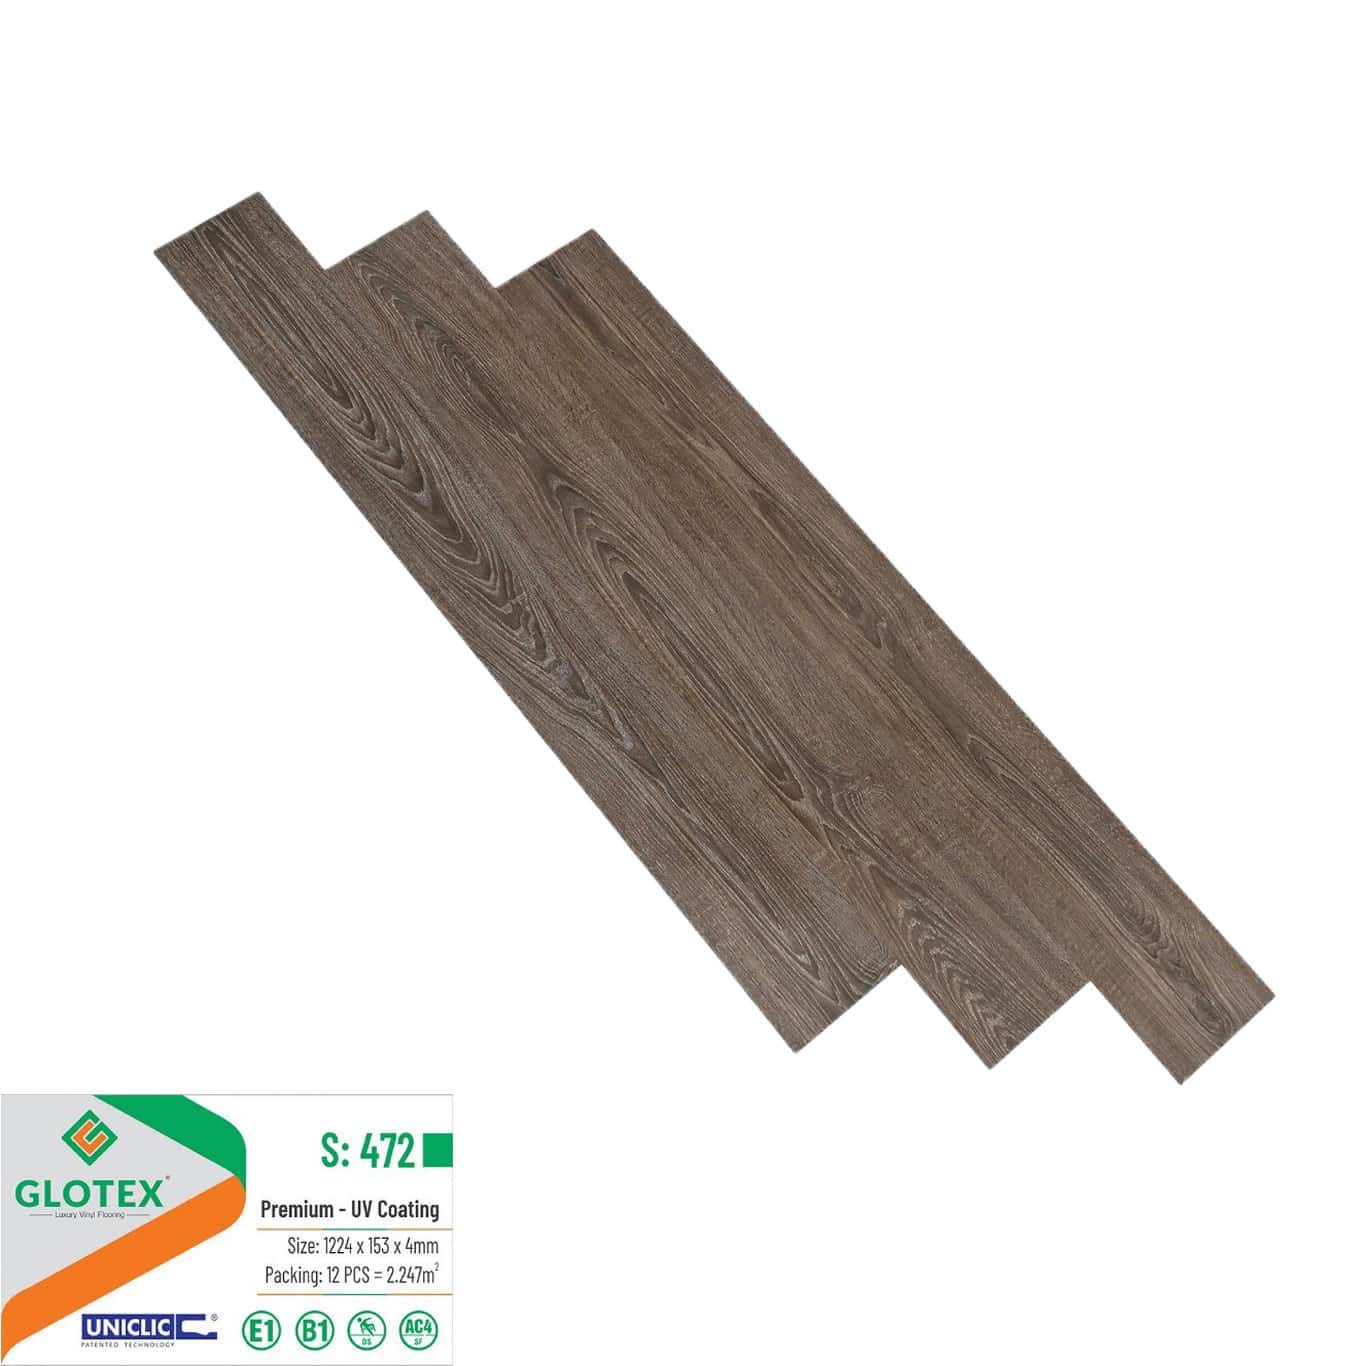 Sàn nhựa giả gỗ Glotex S472